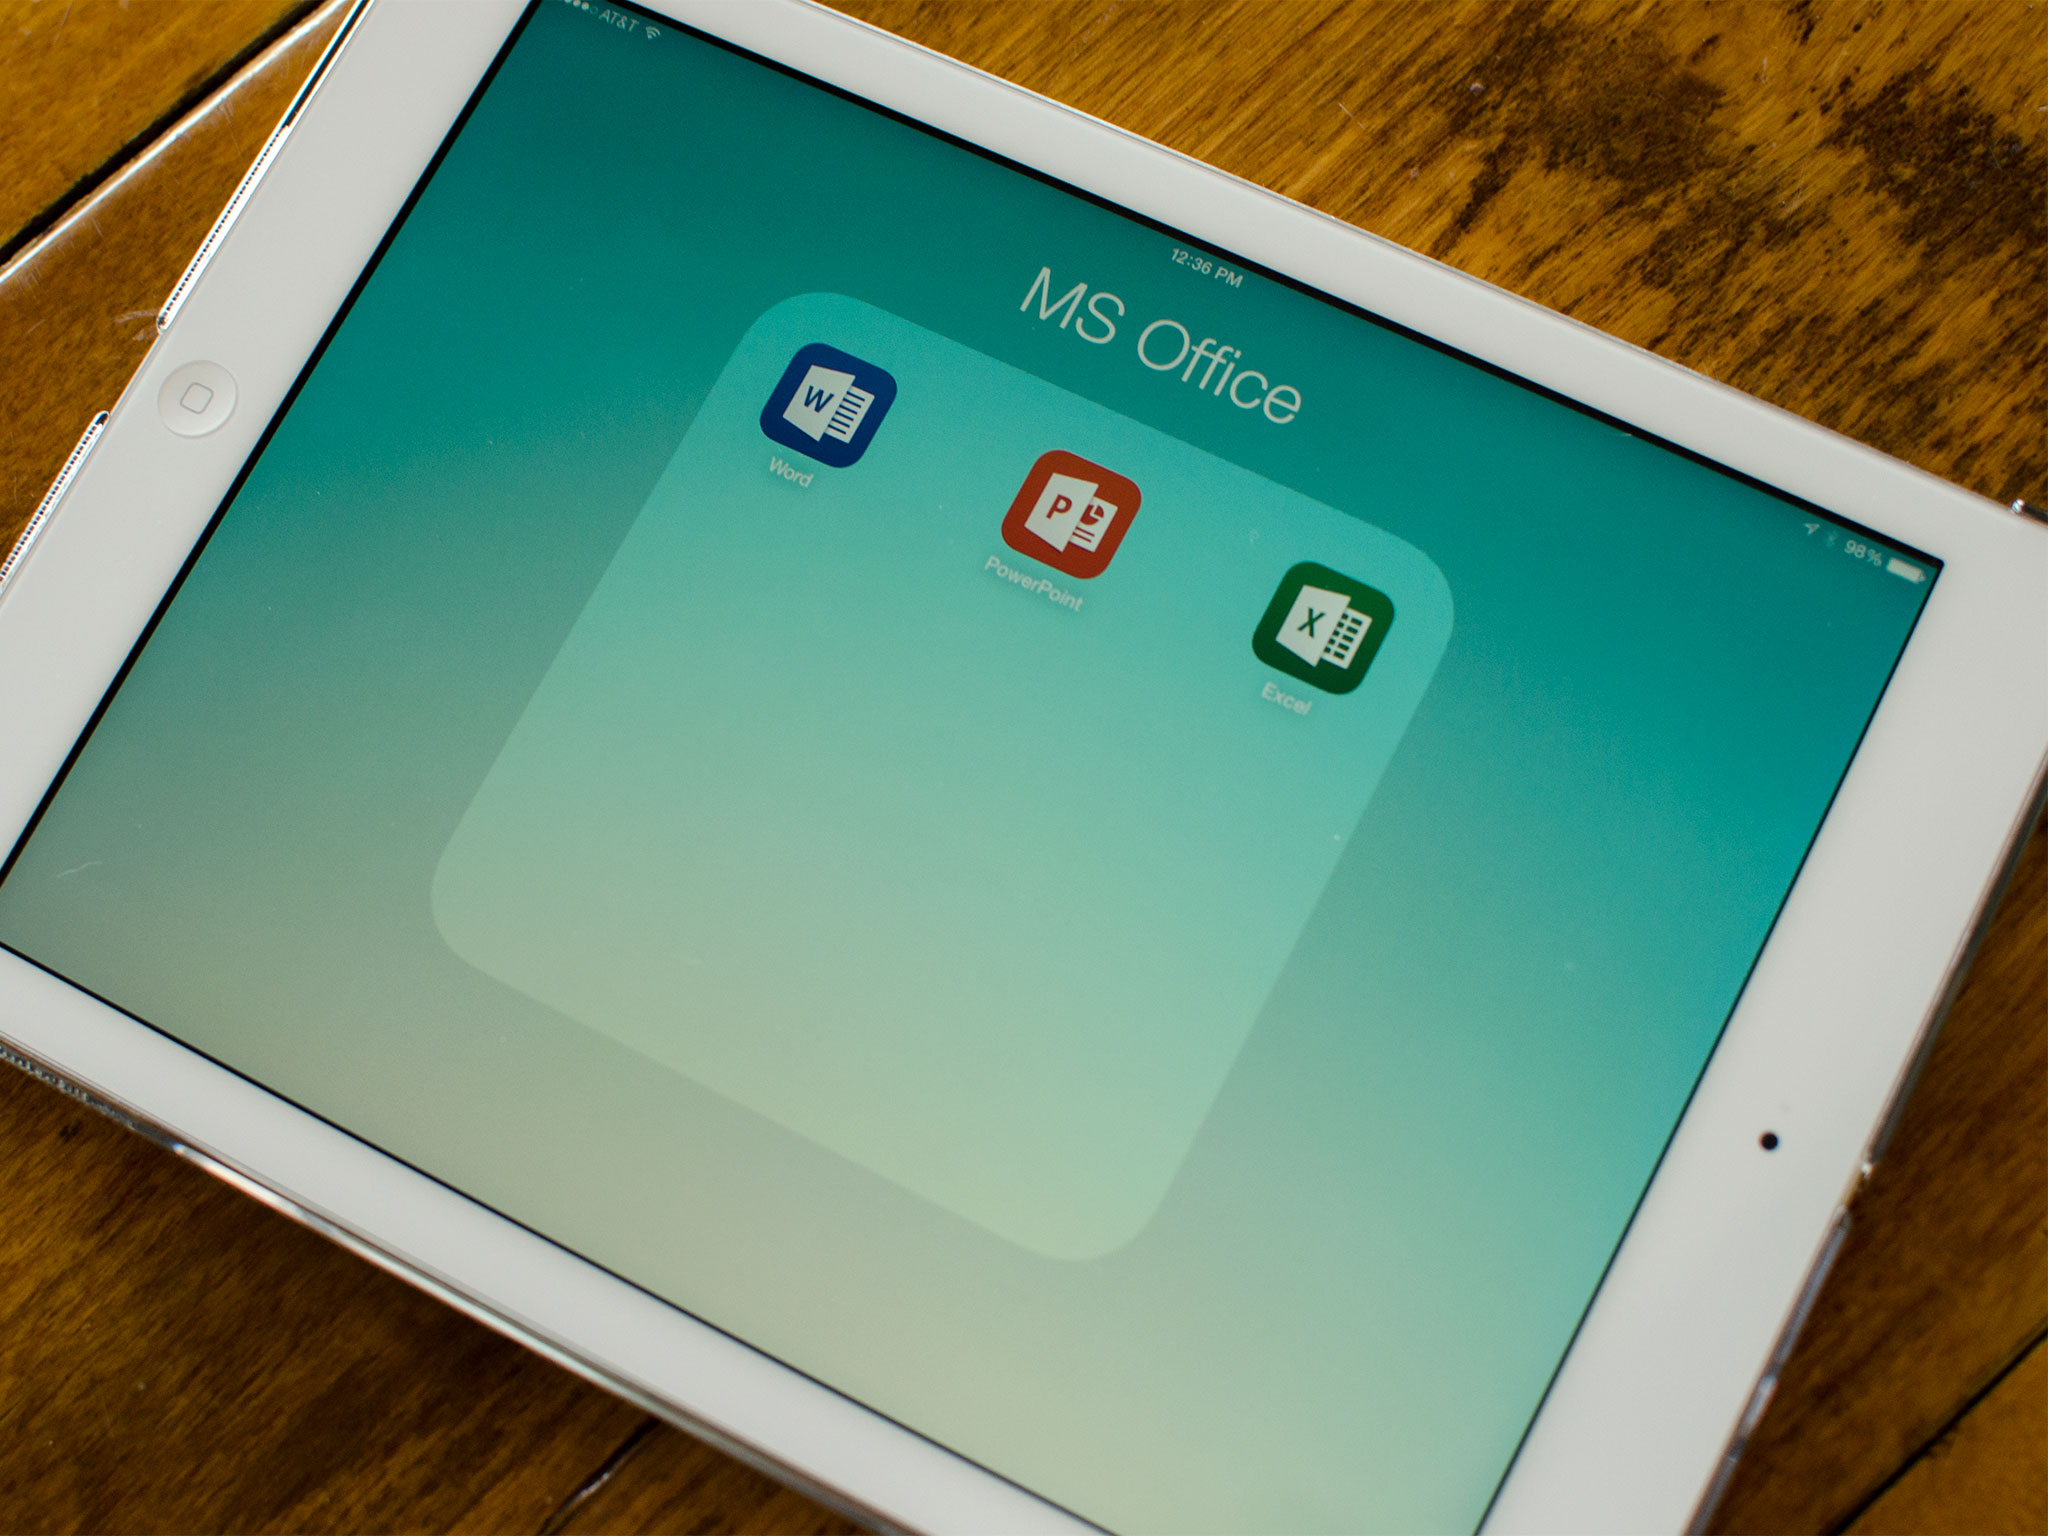 Microsoft Office for iPad review: Yep, it's good